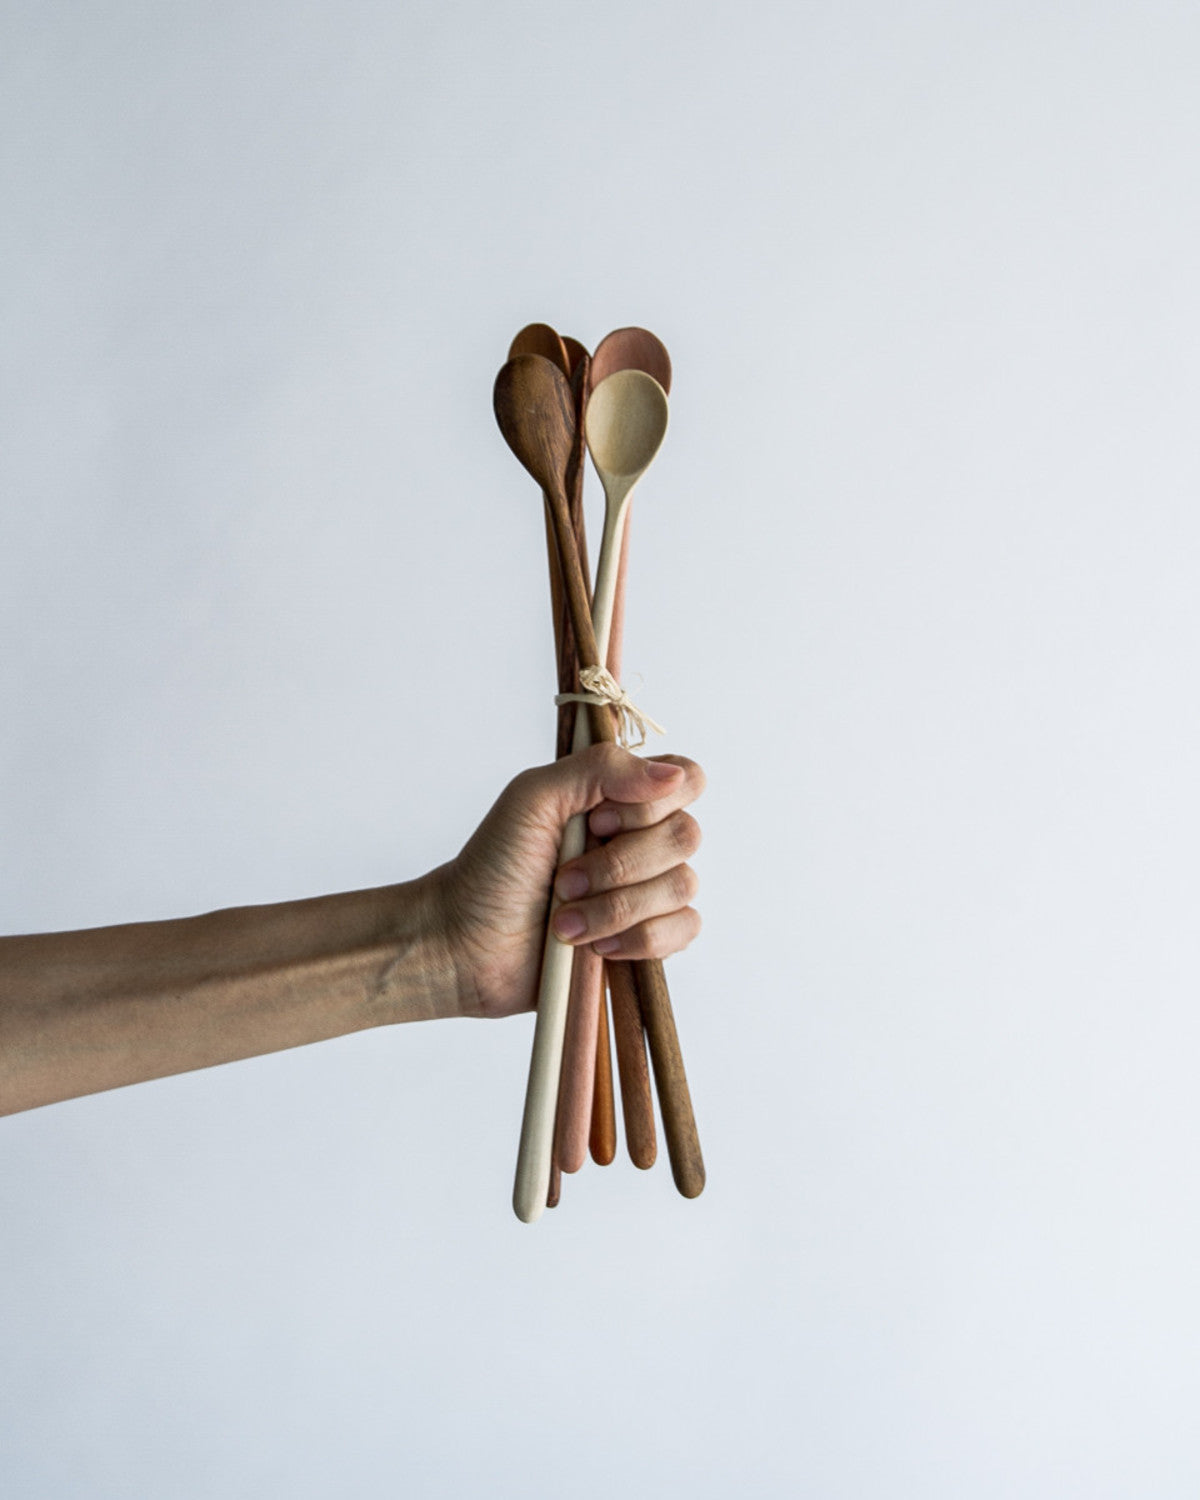 Long Handle Wooden Tasting Spoons- Set Of 6- Chef Tasting/Stirring Spo